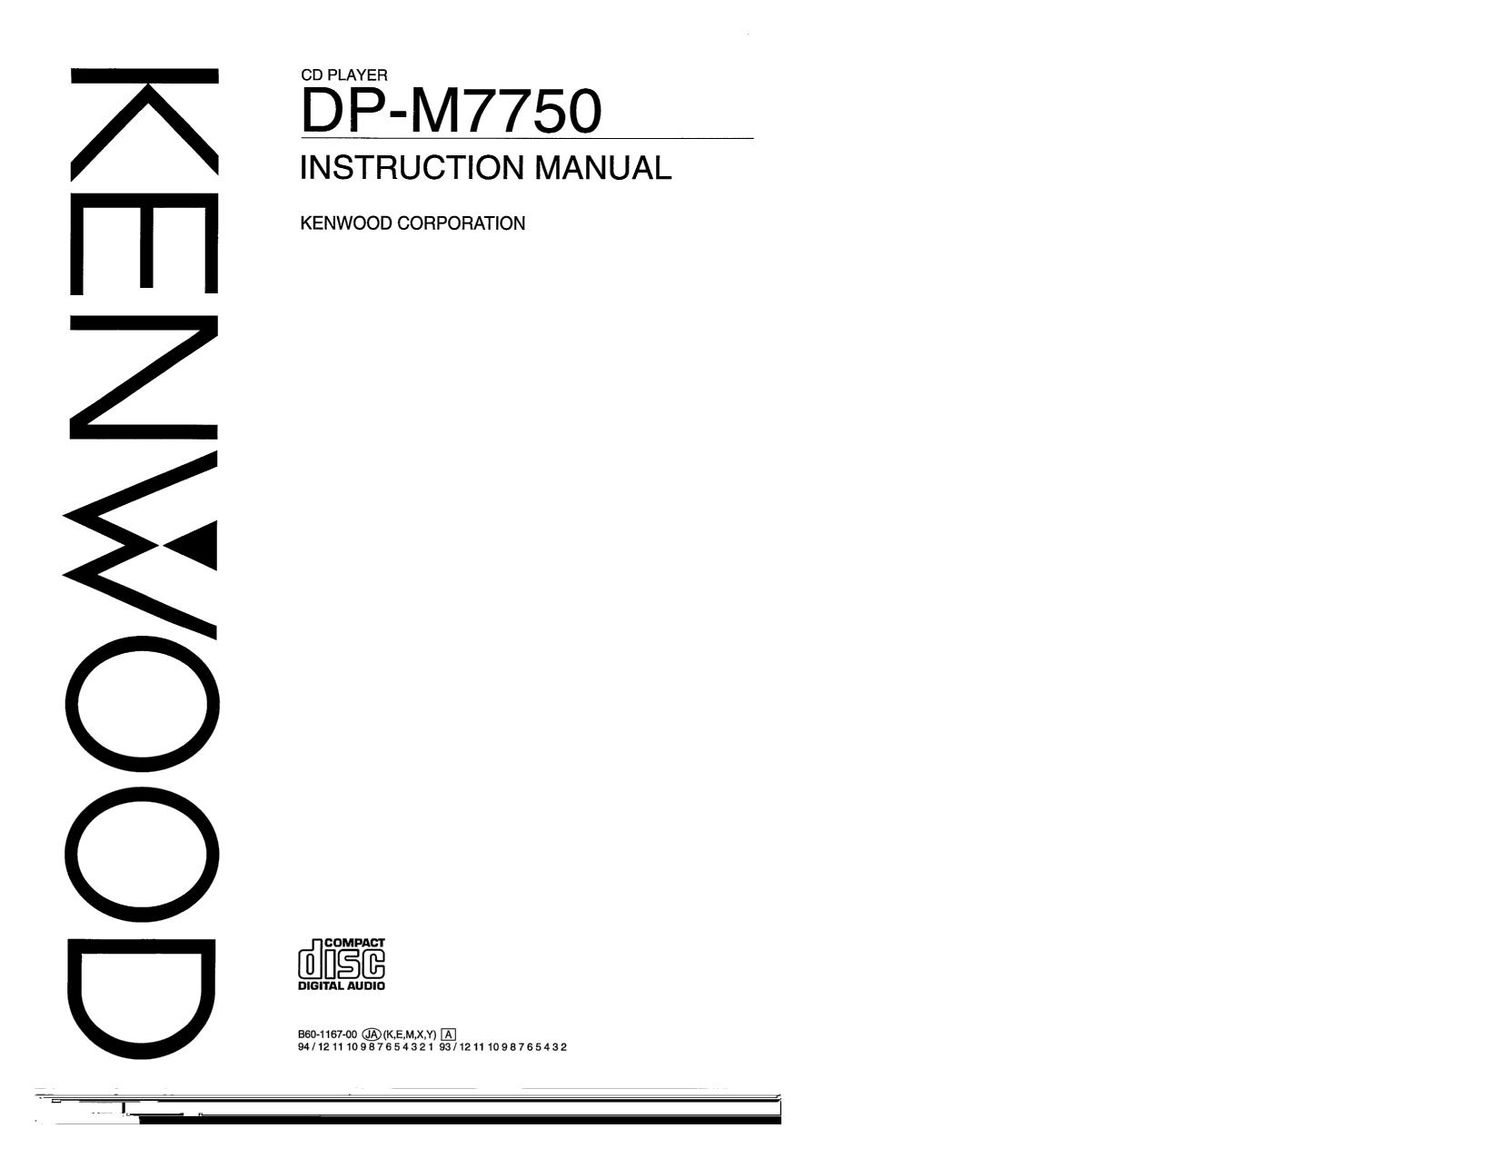 Kenwood DPM 7750 Owners Manual